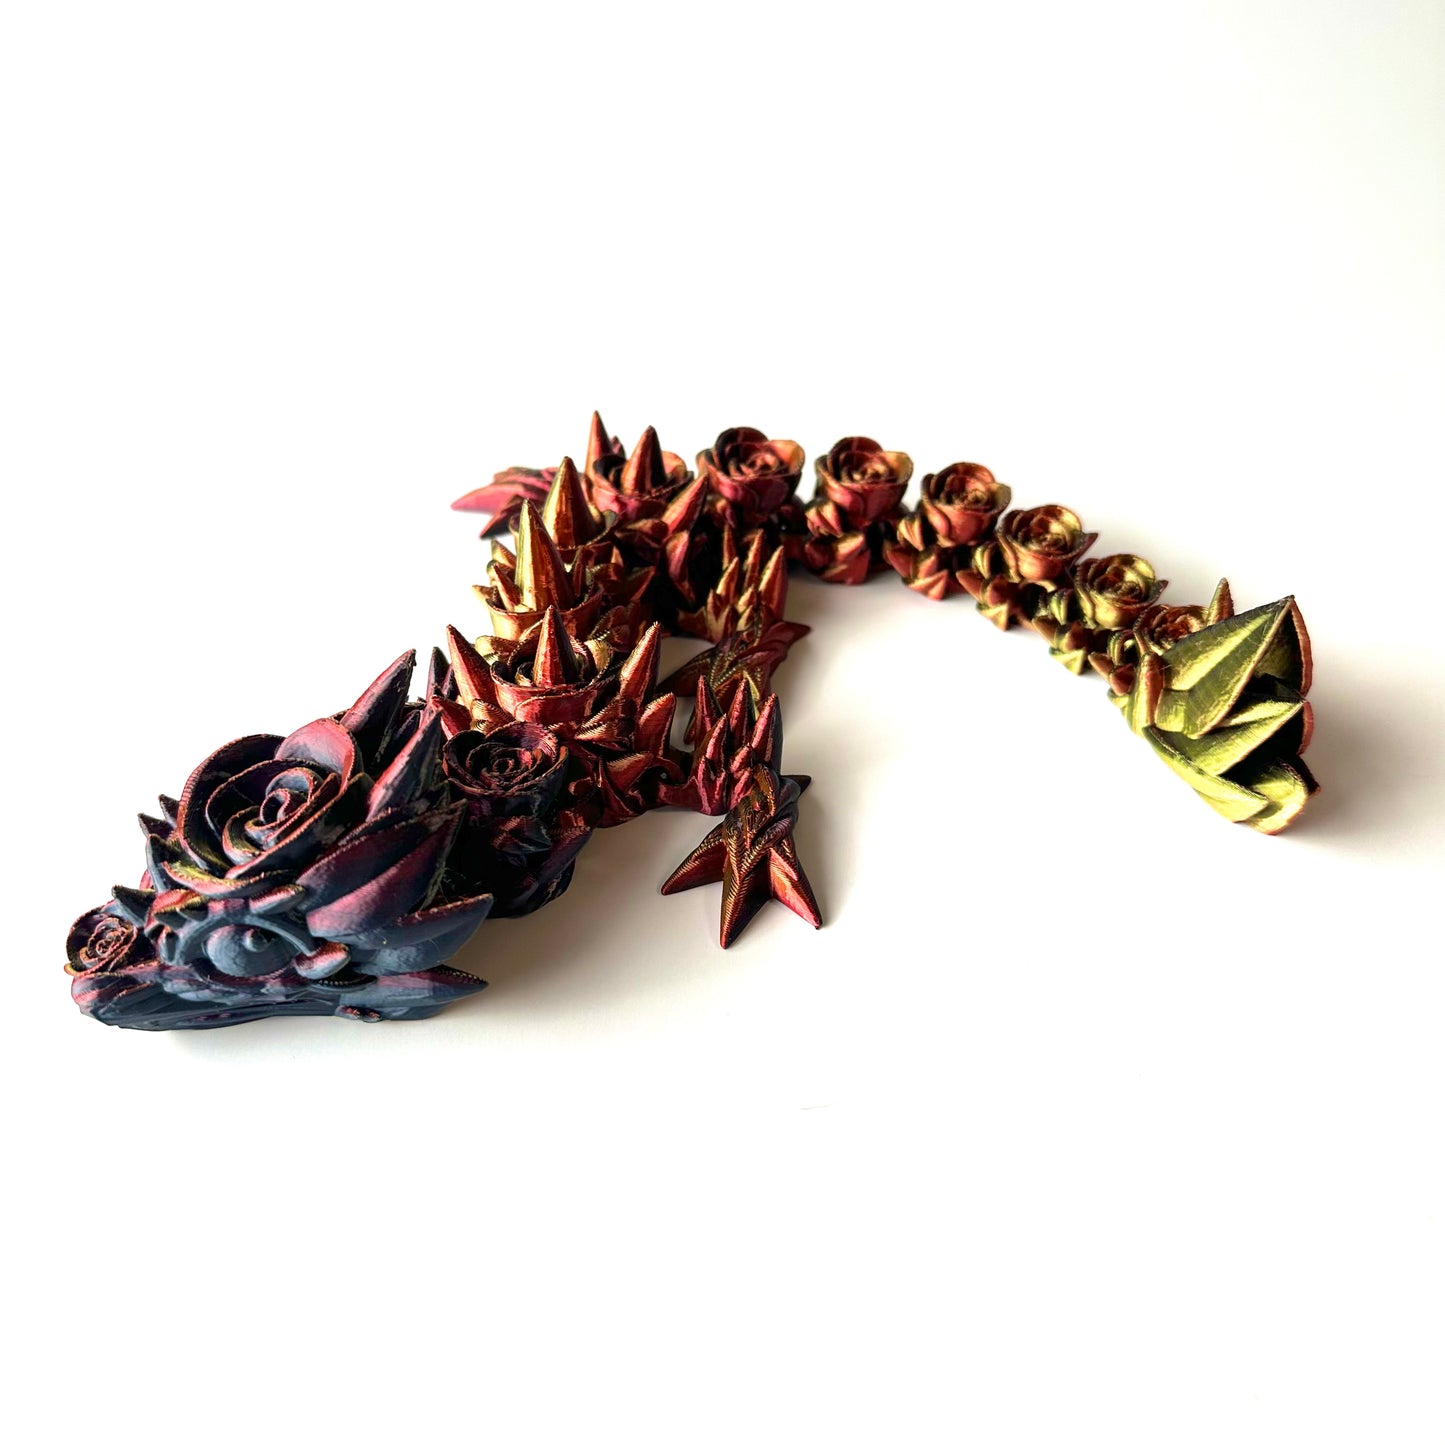 Large Baby Rose Dragon - 3D Printed Articulating